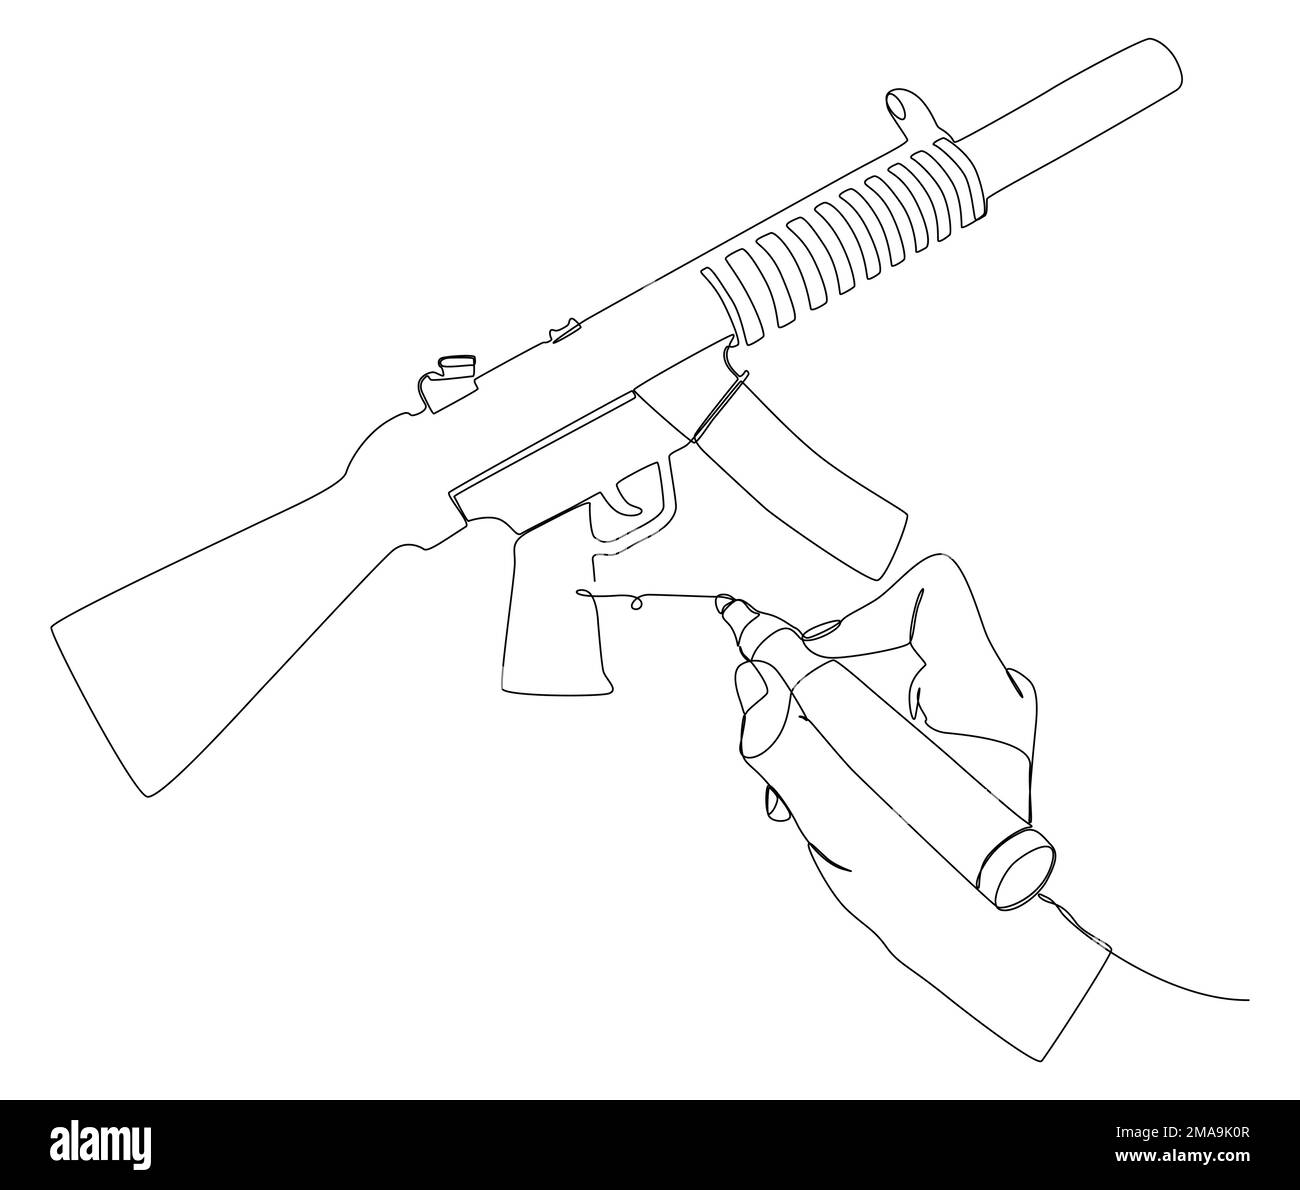 Pencil sketch machine gun. Stock Photo